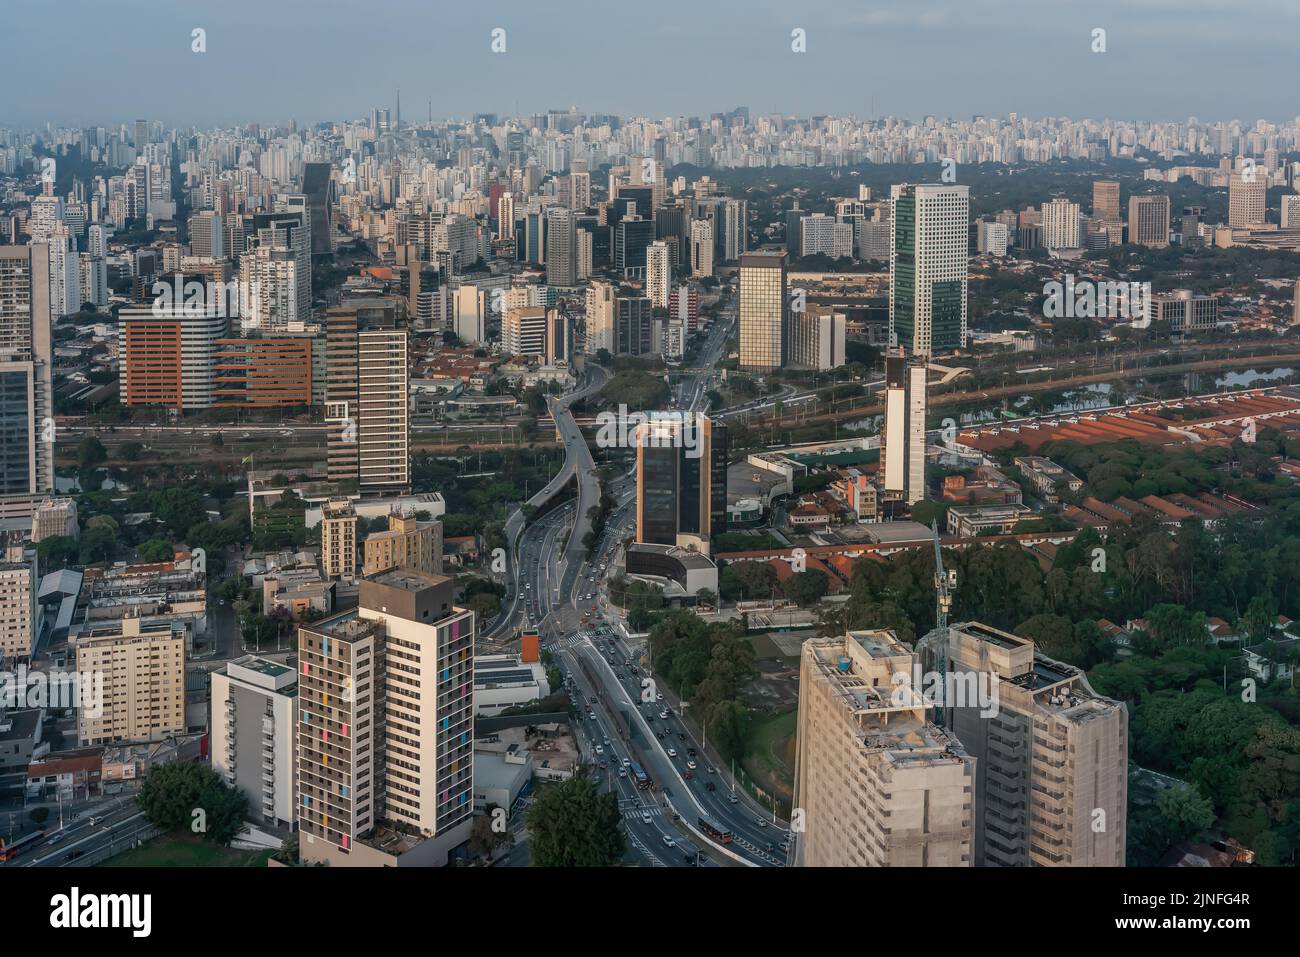 Aerial View of Eusebio Matoso Bridge over Pinheiros River - Sao Paulo, Brazil Stock Photo